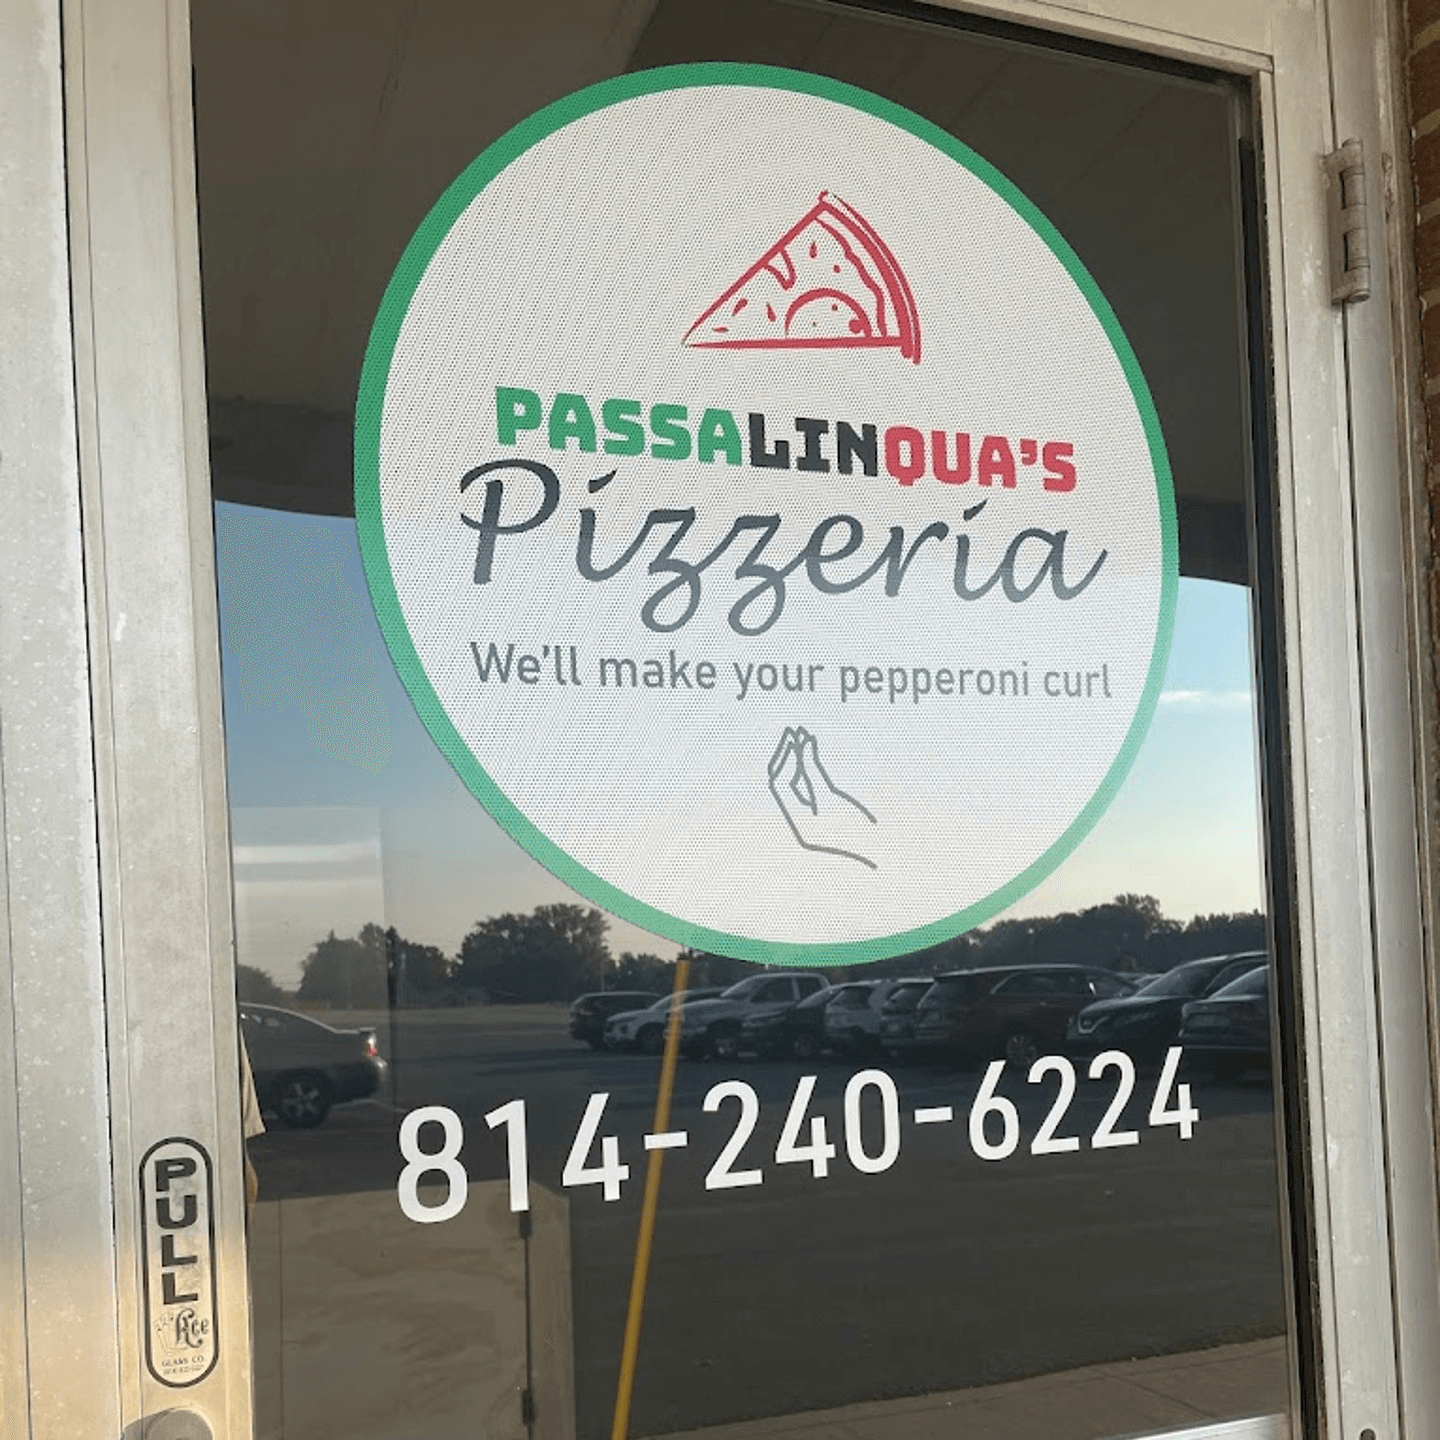 Welcome to Passalinqua's Pizzeria